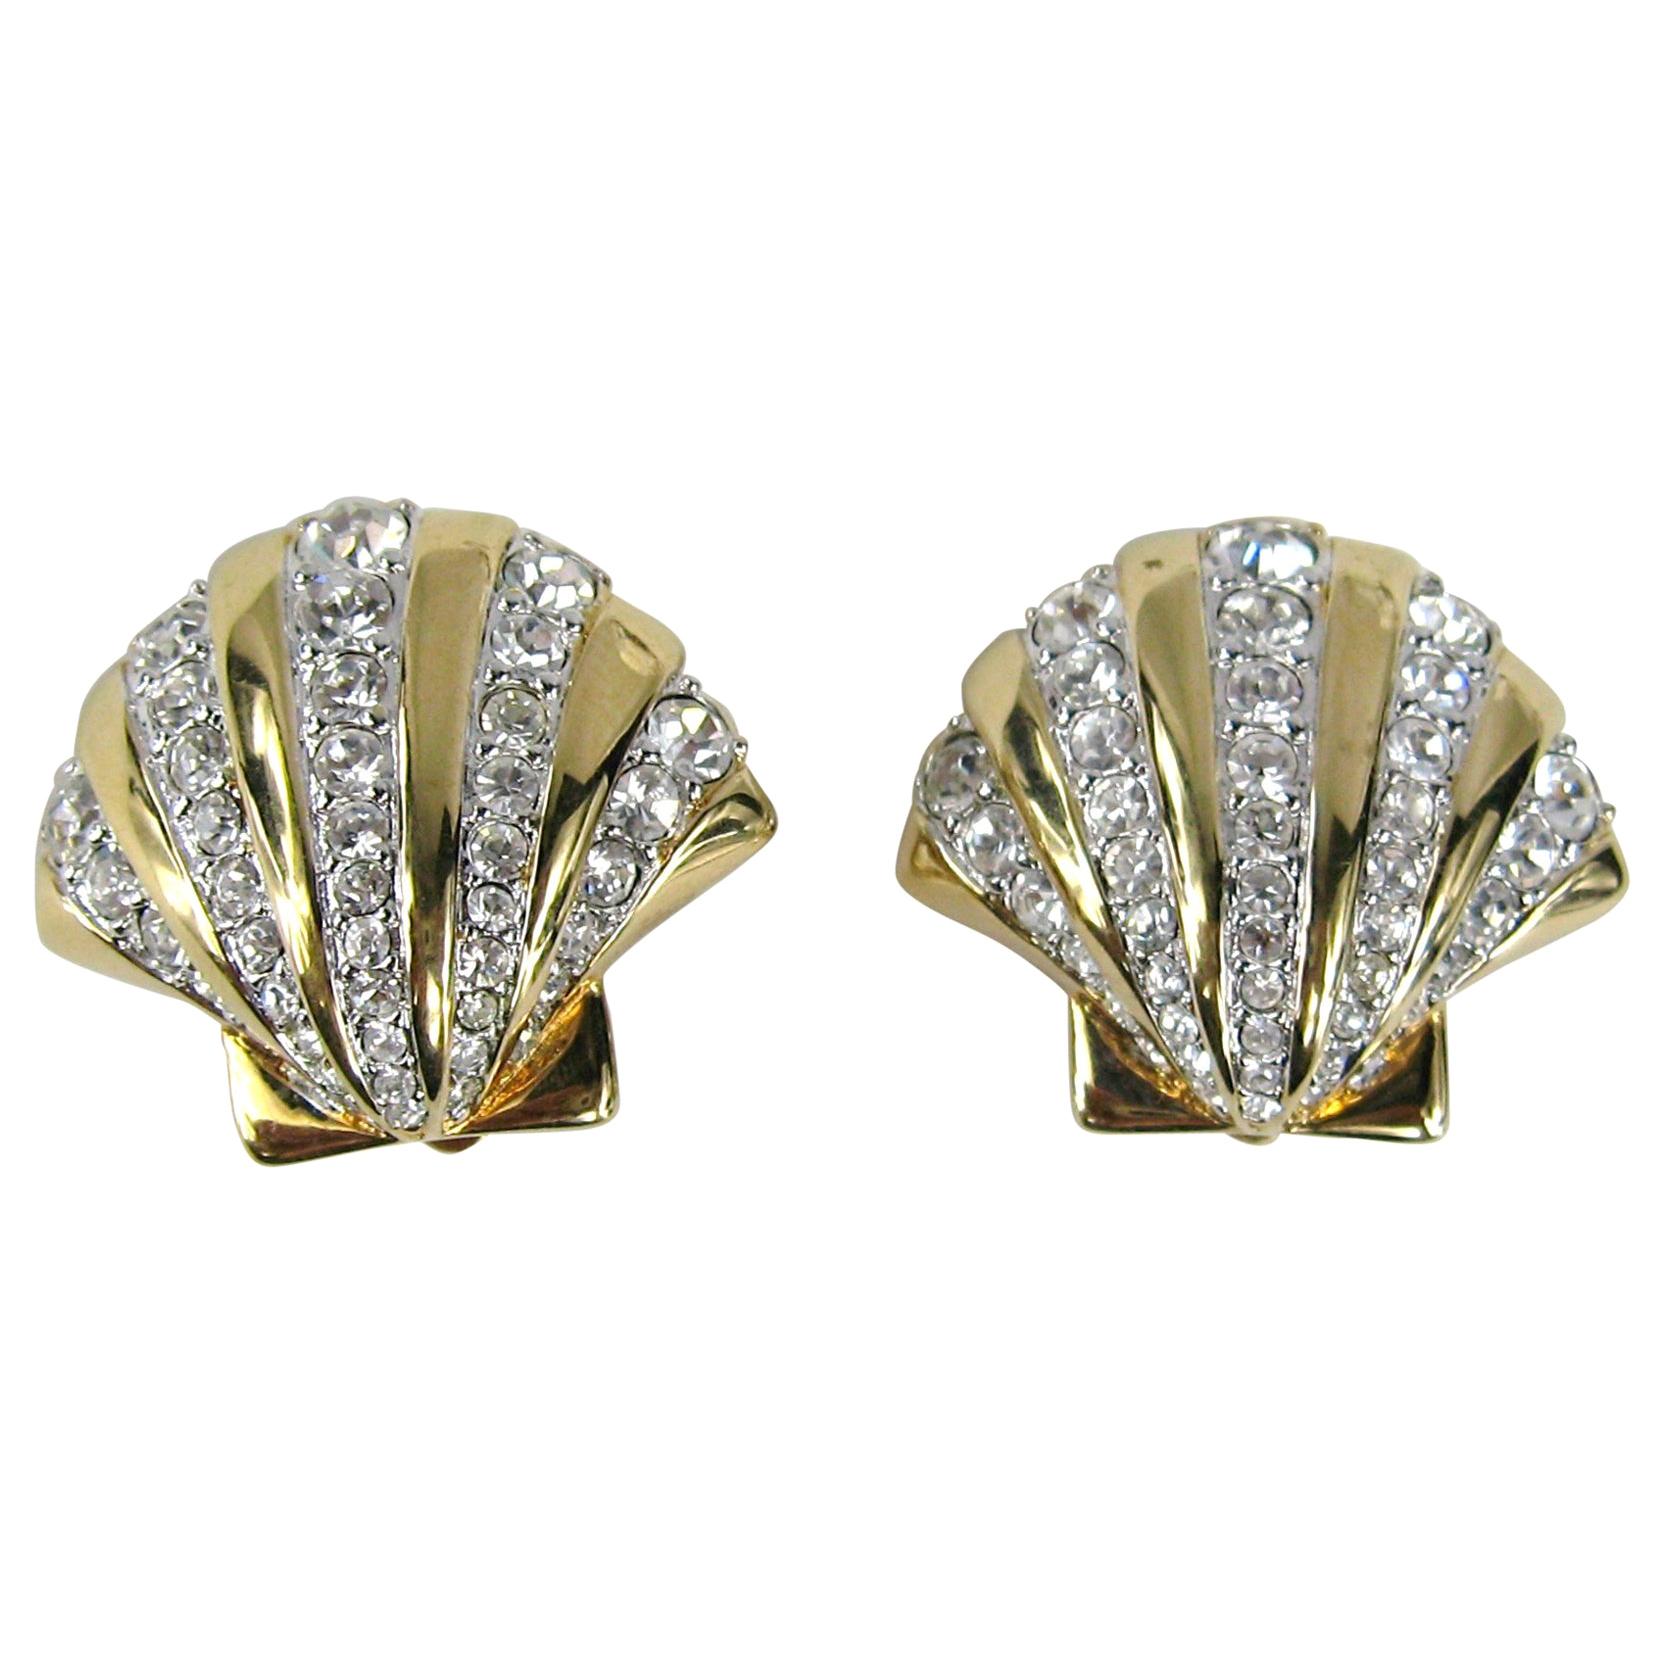  Daniel Swarovski Crystal Encrusted Shell earrings New, Never Worn 1980s For Sale